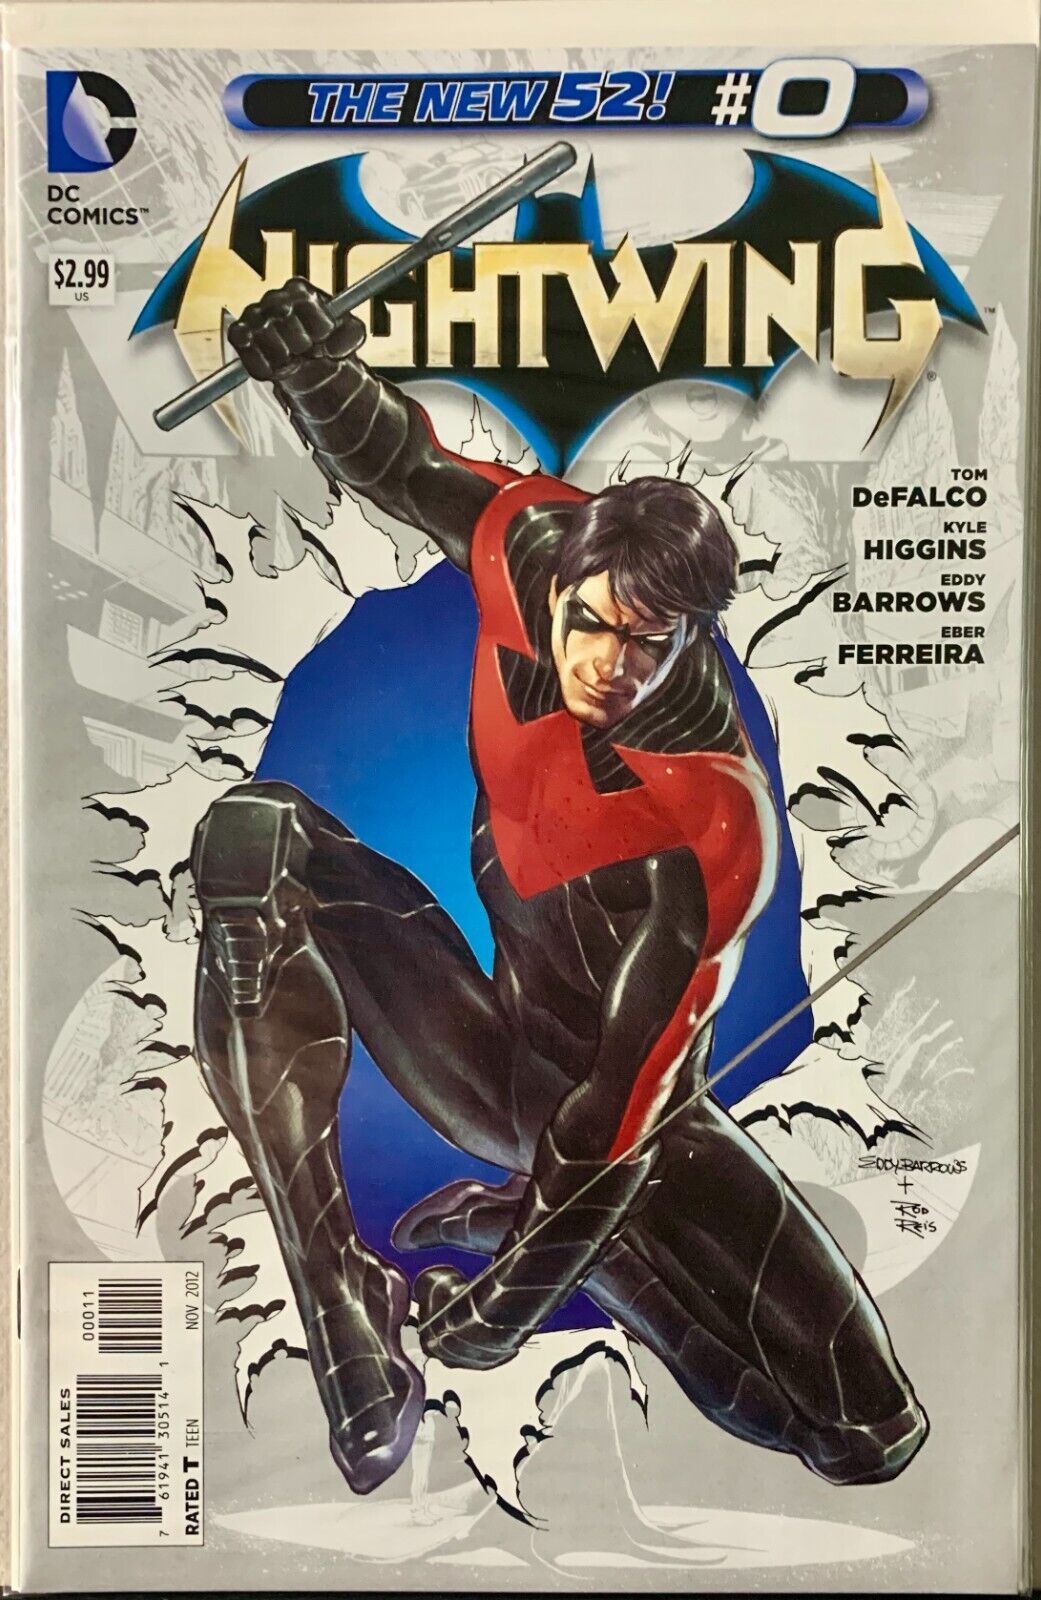 Nightwing #0 DC Comics November 2012 The New 52